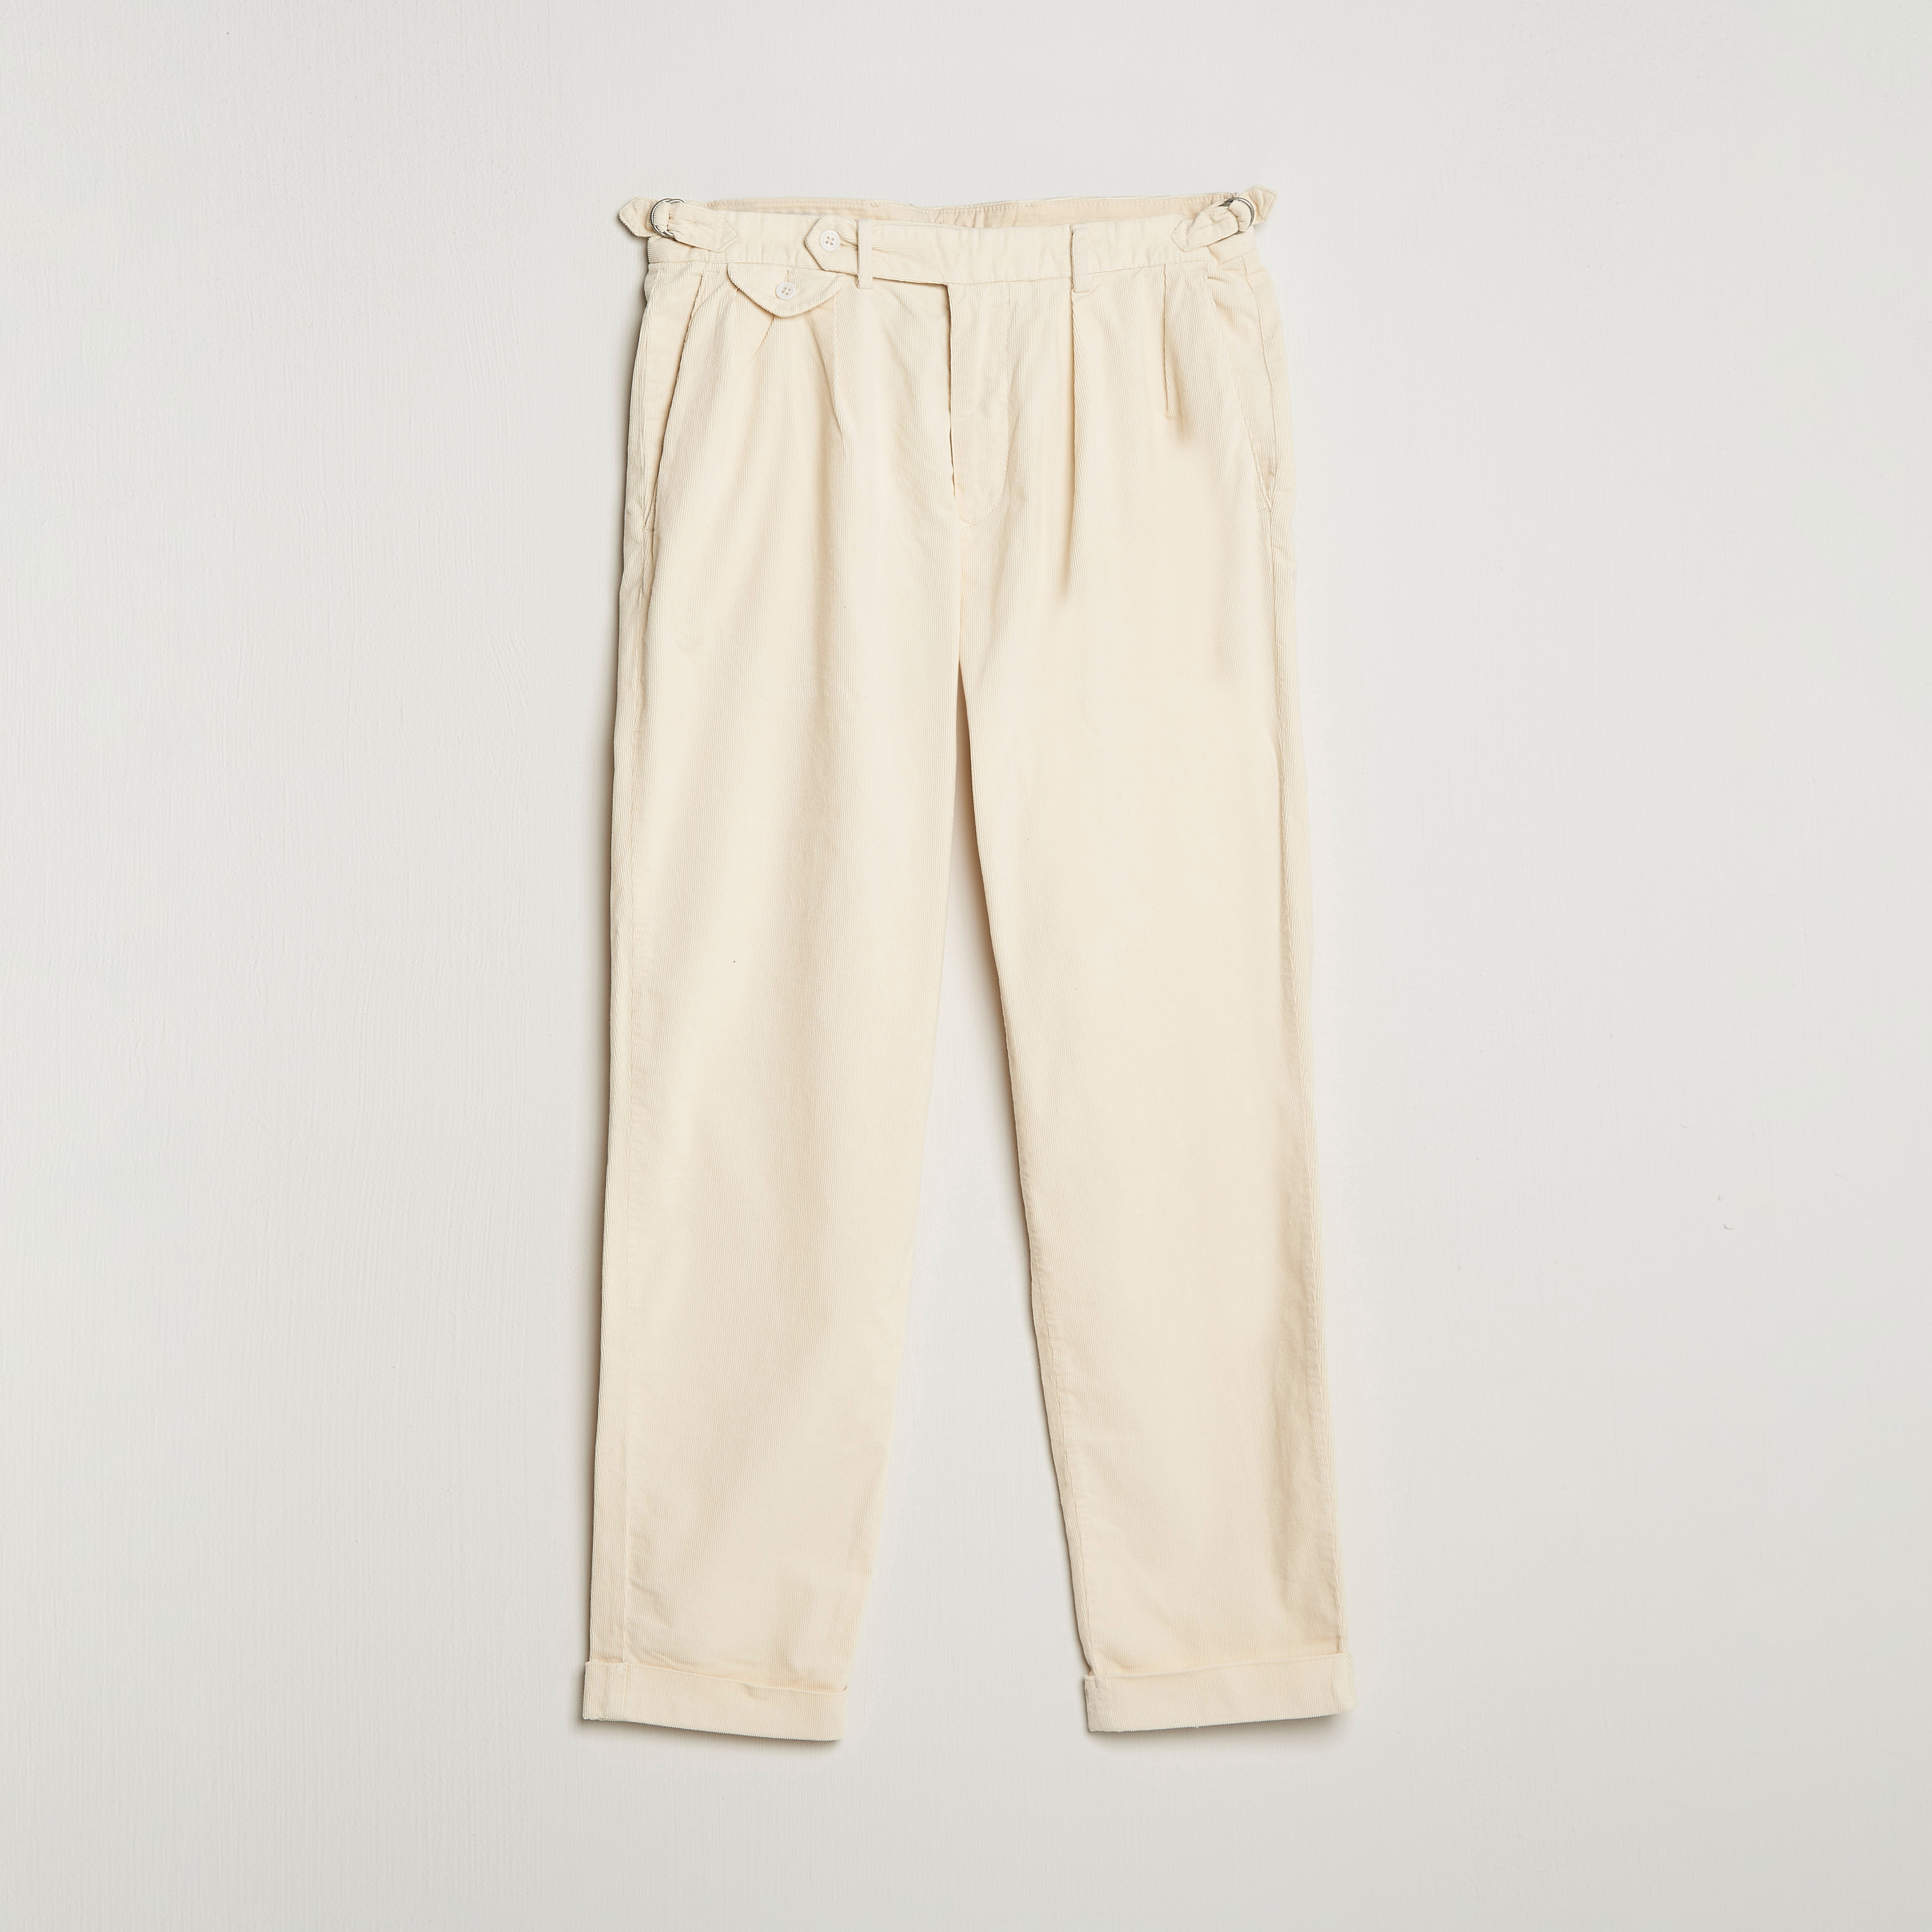 Polo Ralph Lauren Tennis Pants